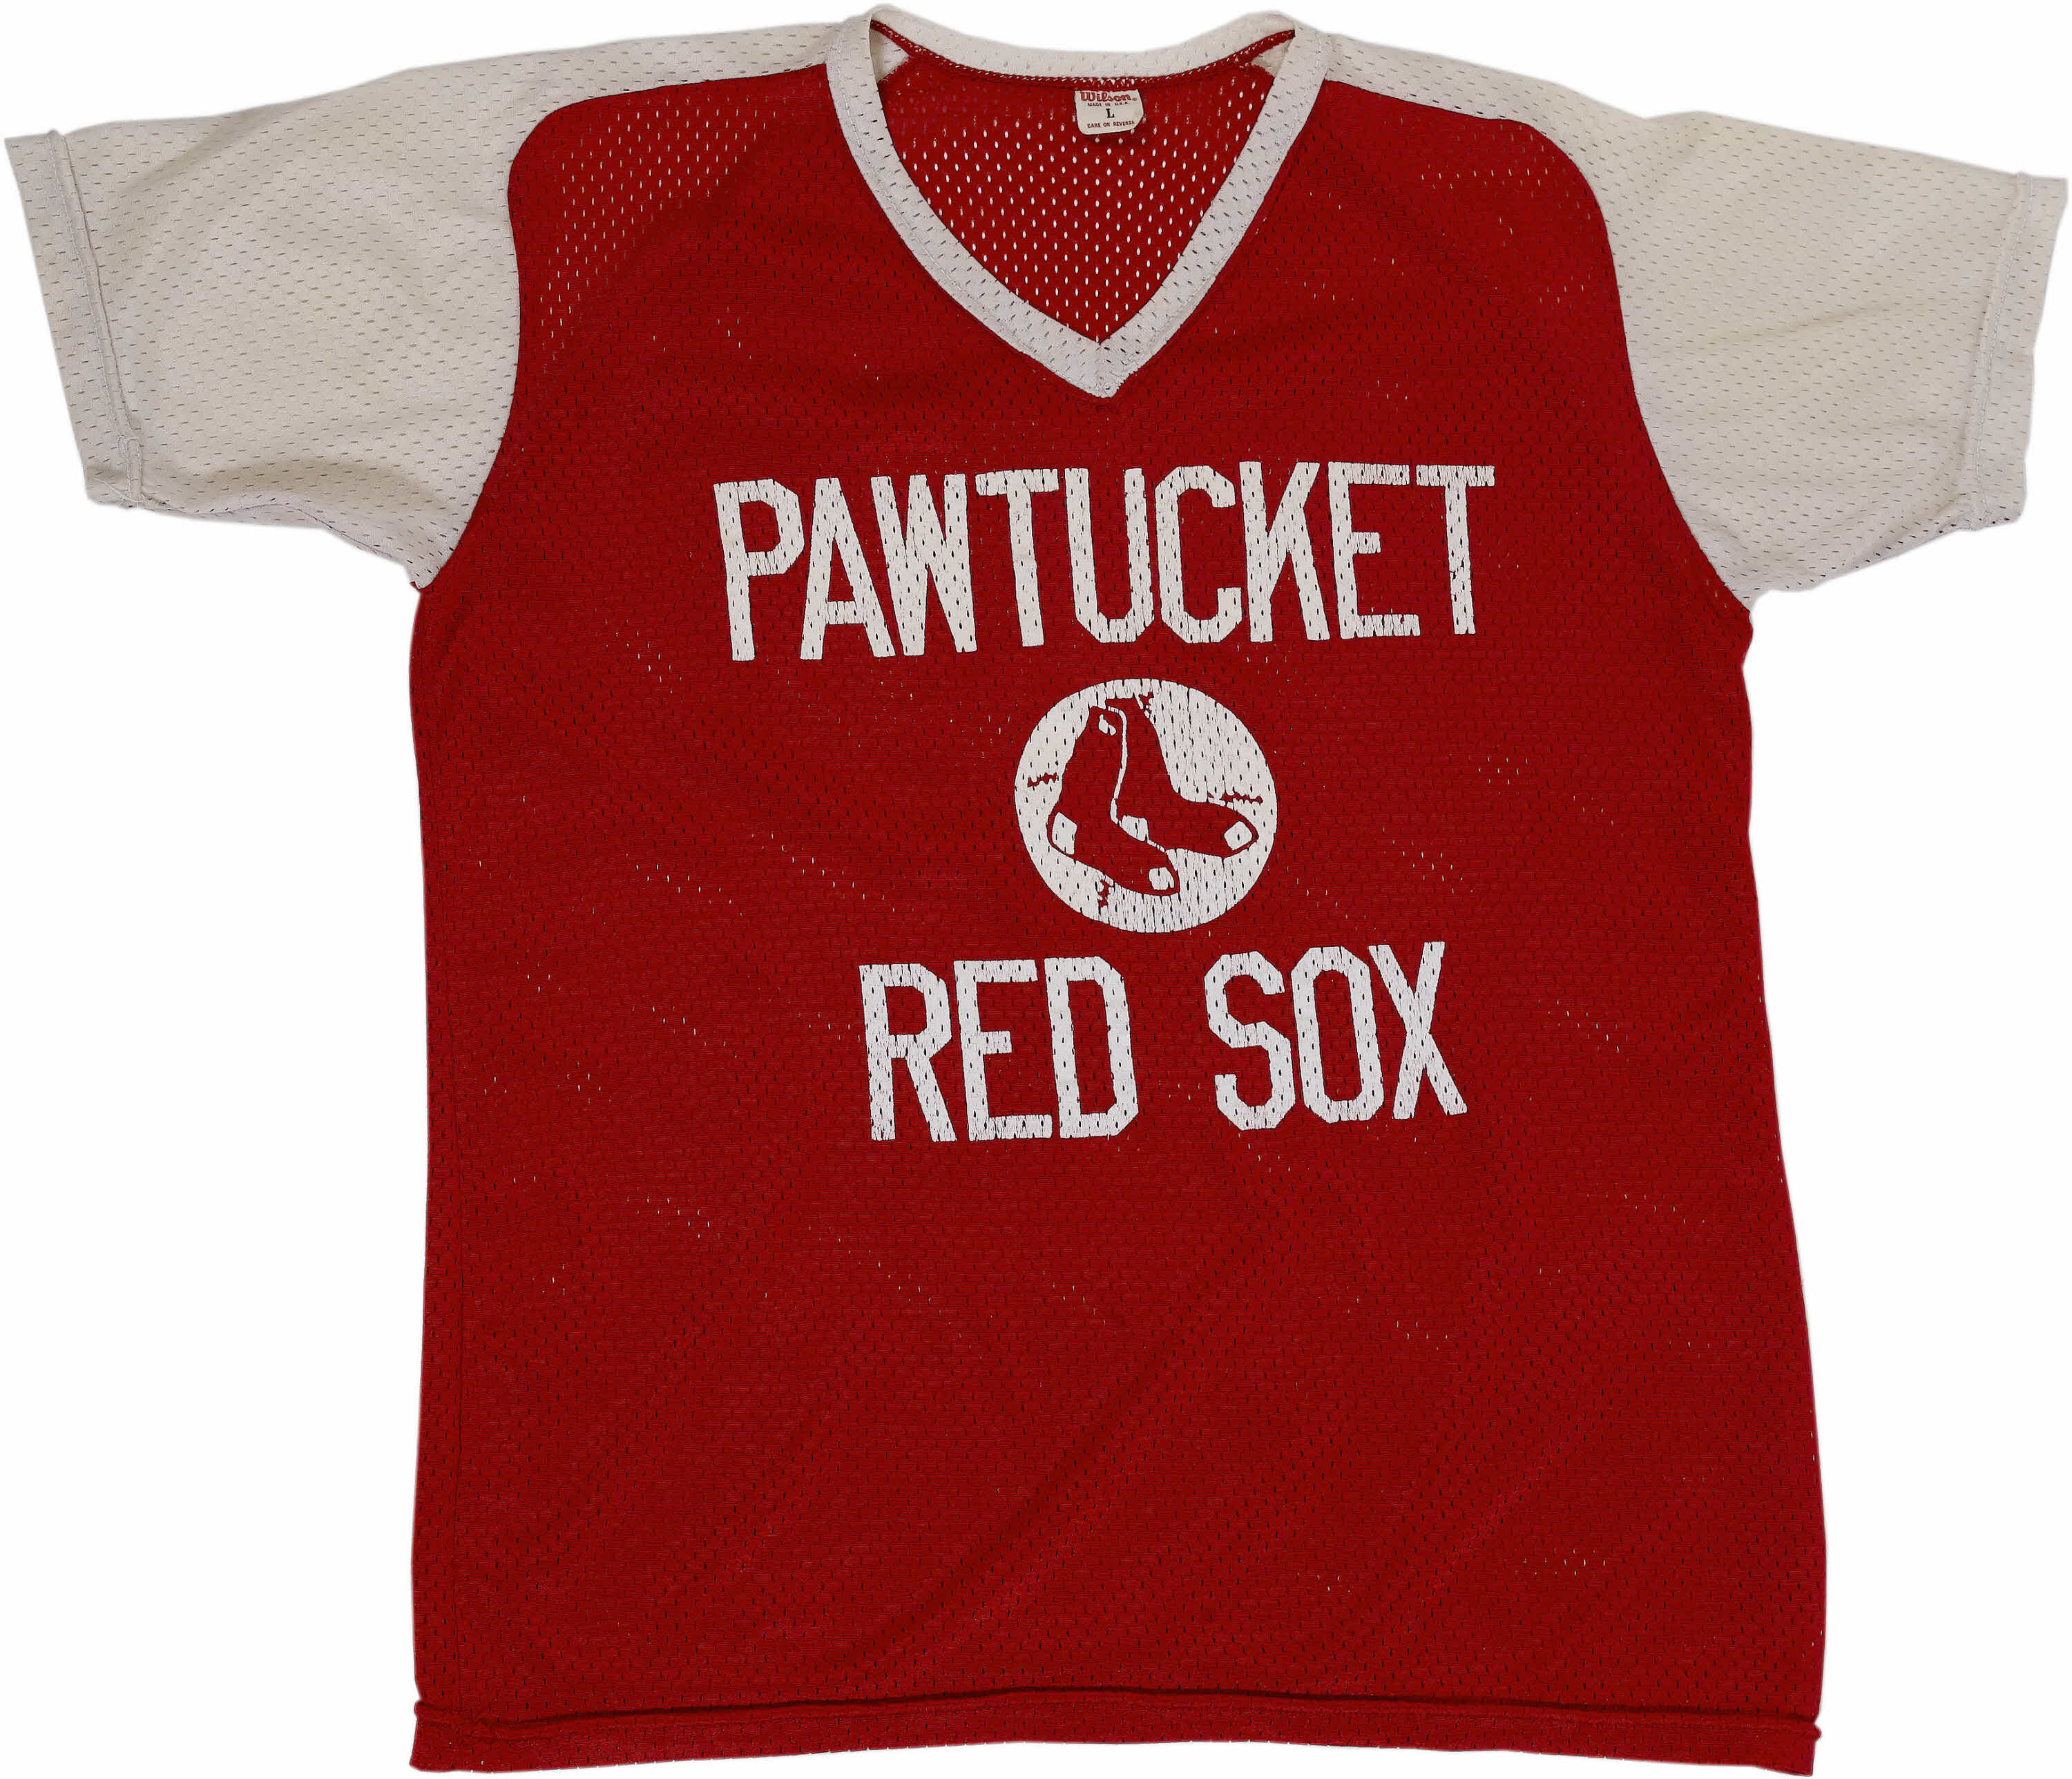 pawtucket red sox t shirt